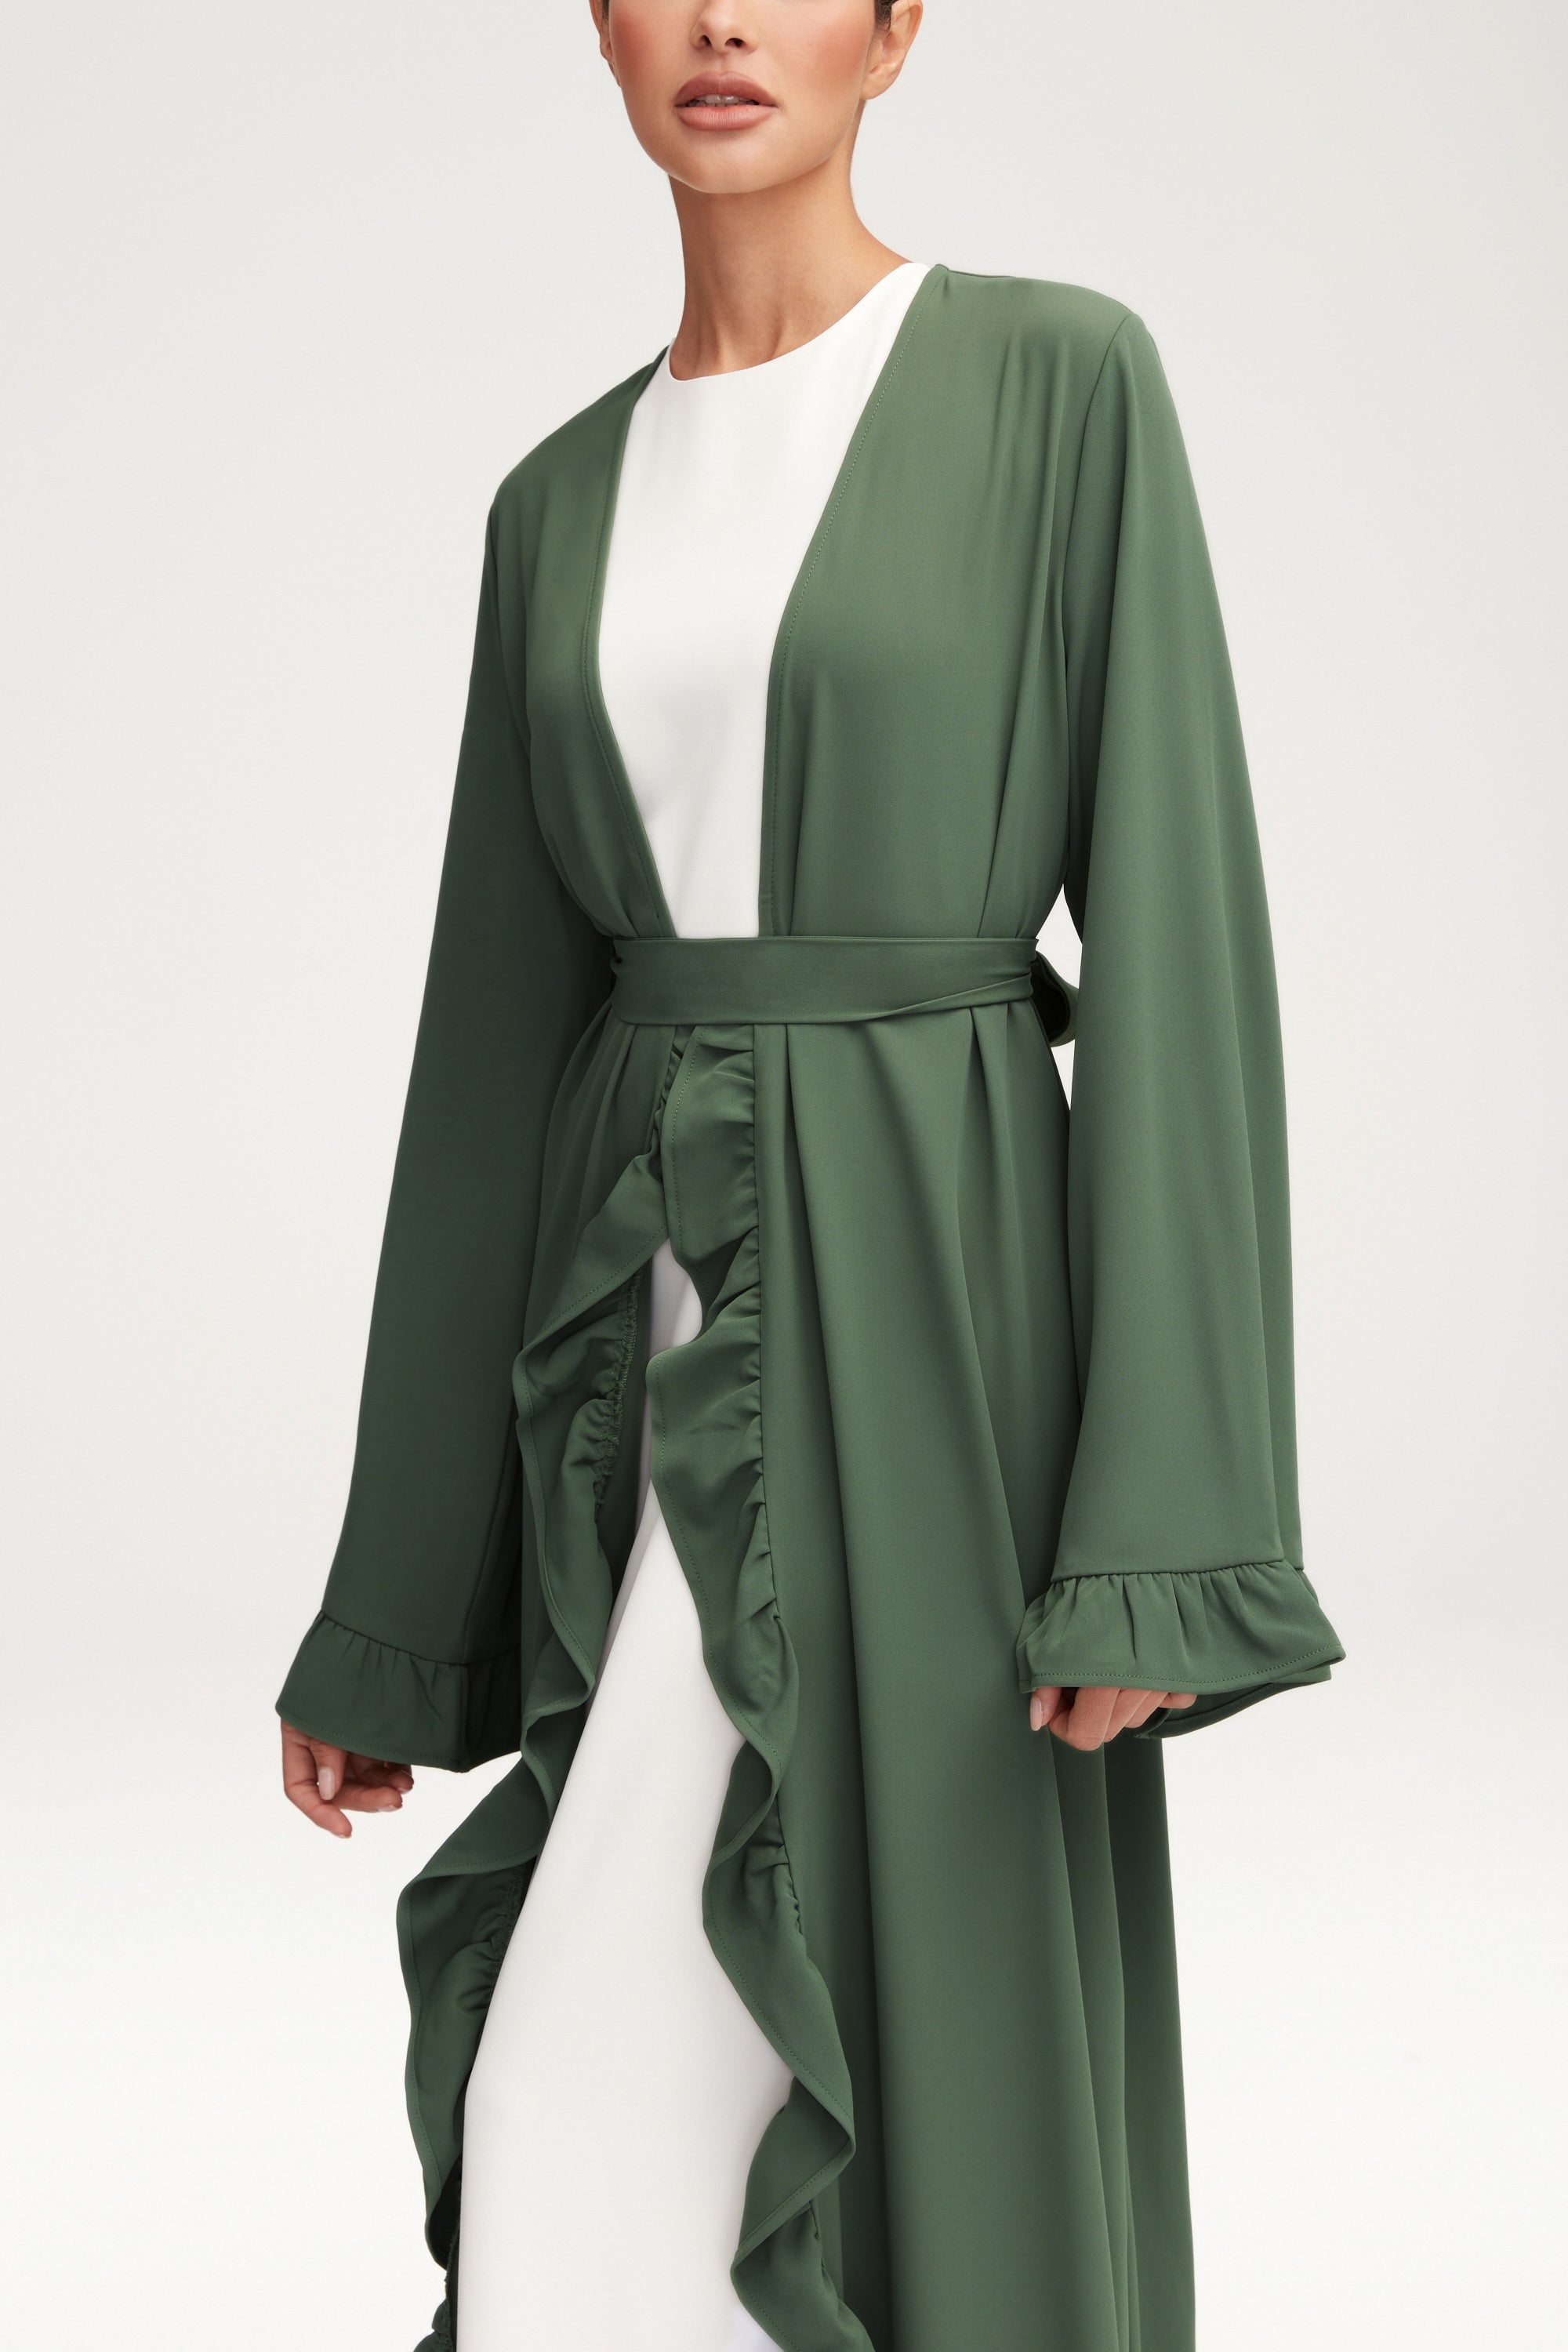 Mariam Ruffle Open Abaya - Dark Forest Clothing Veiled 